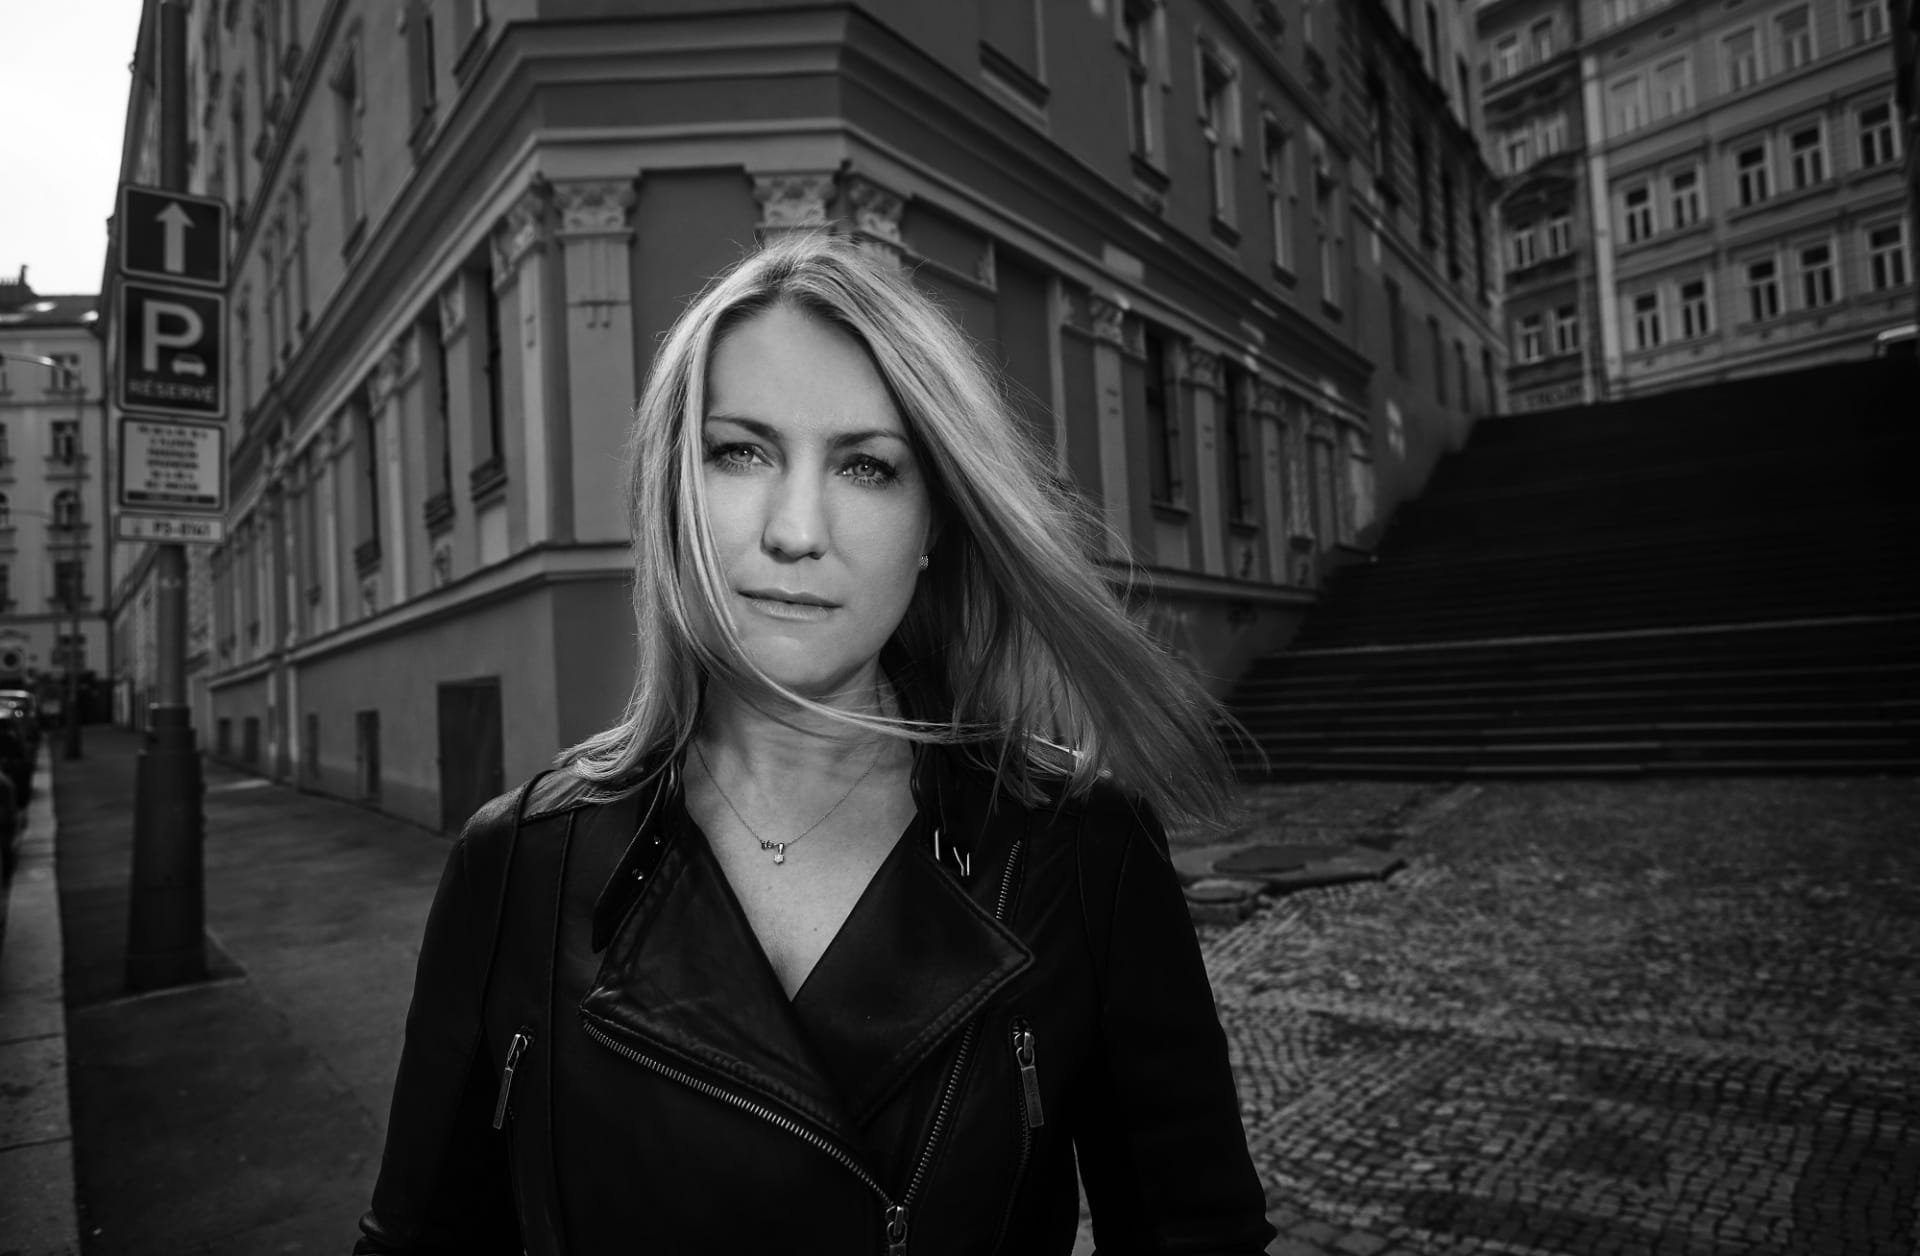 Novinářka a fotografka Lenka Klicperová 1